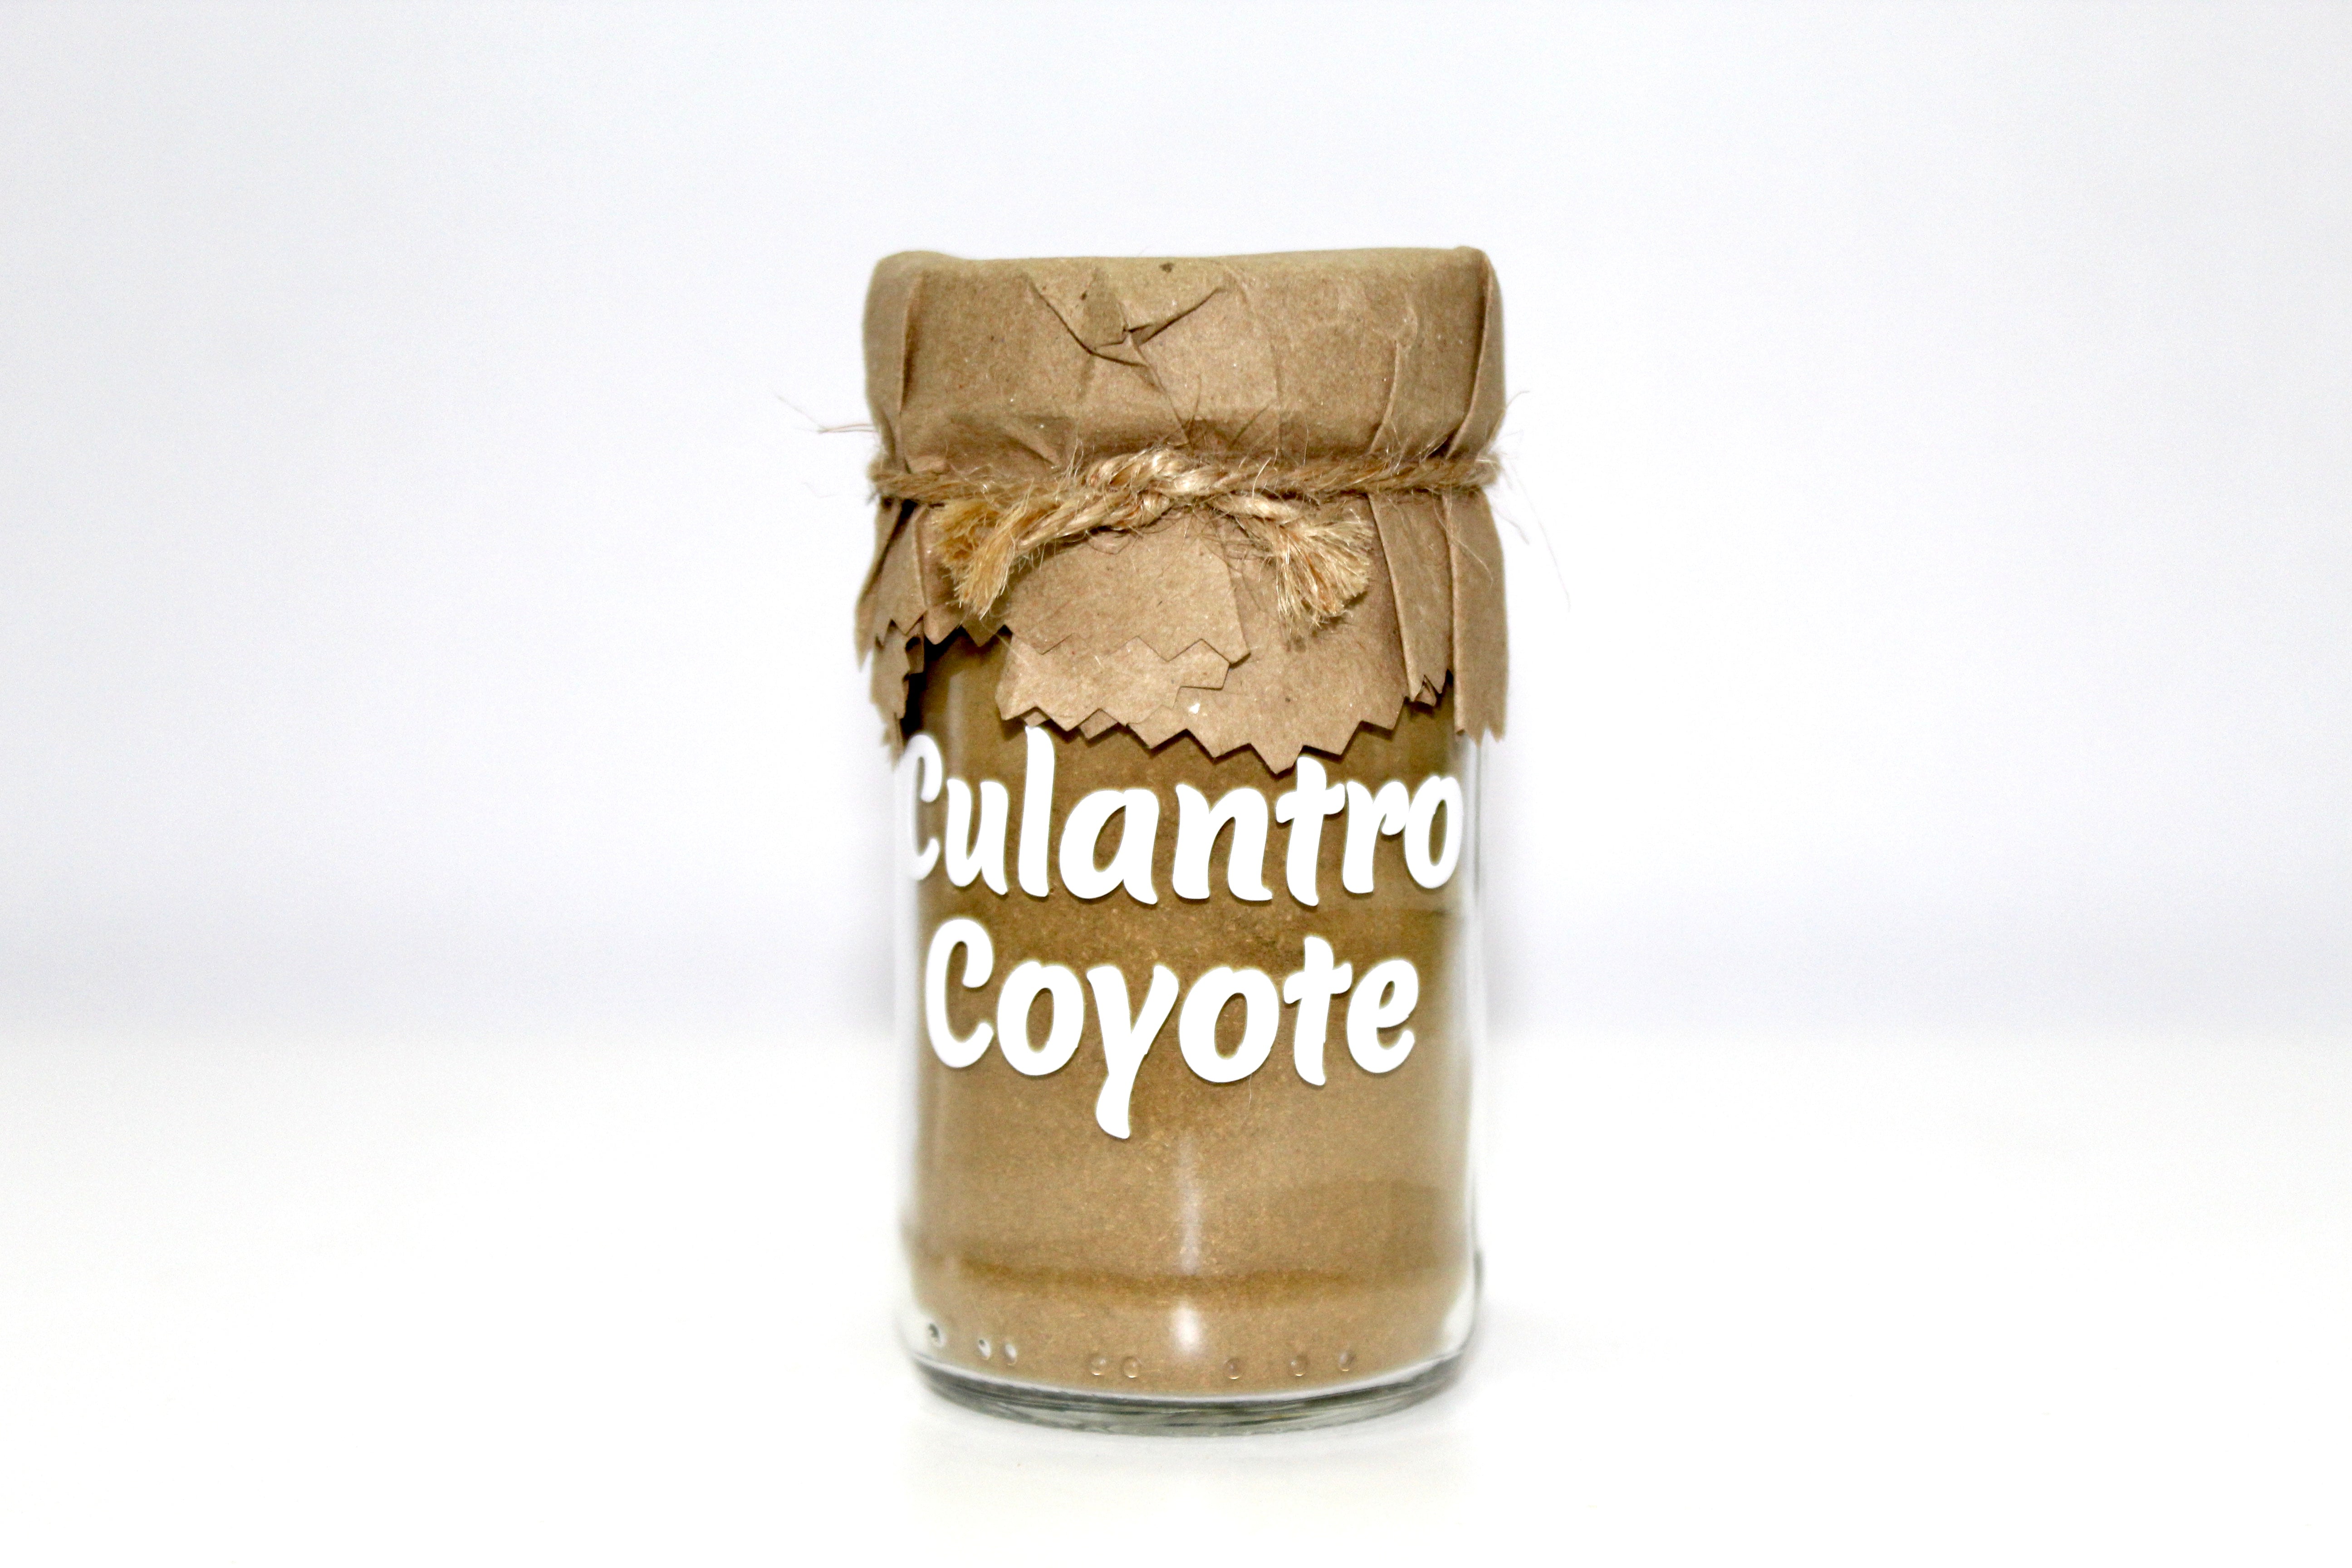 Culantro Coyote